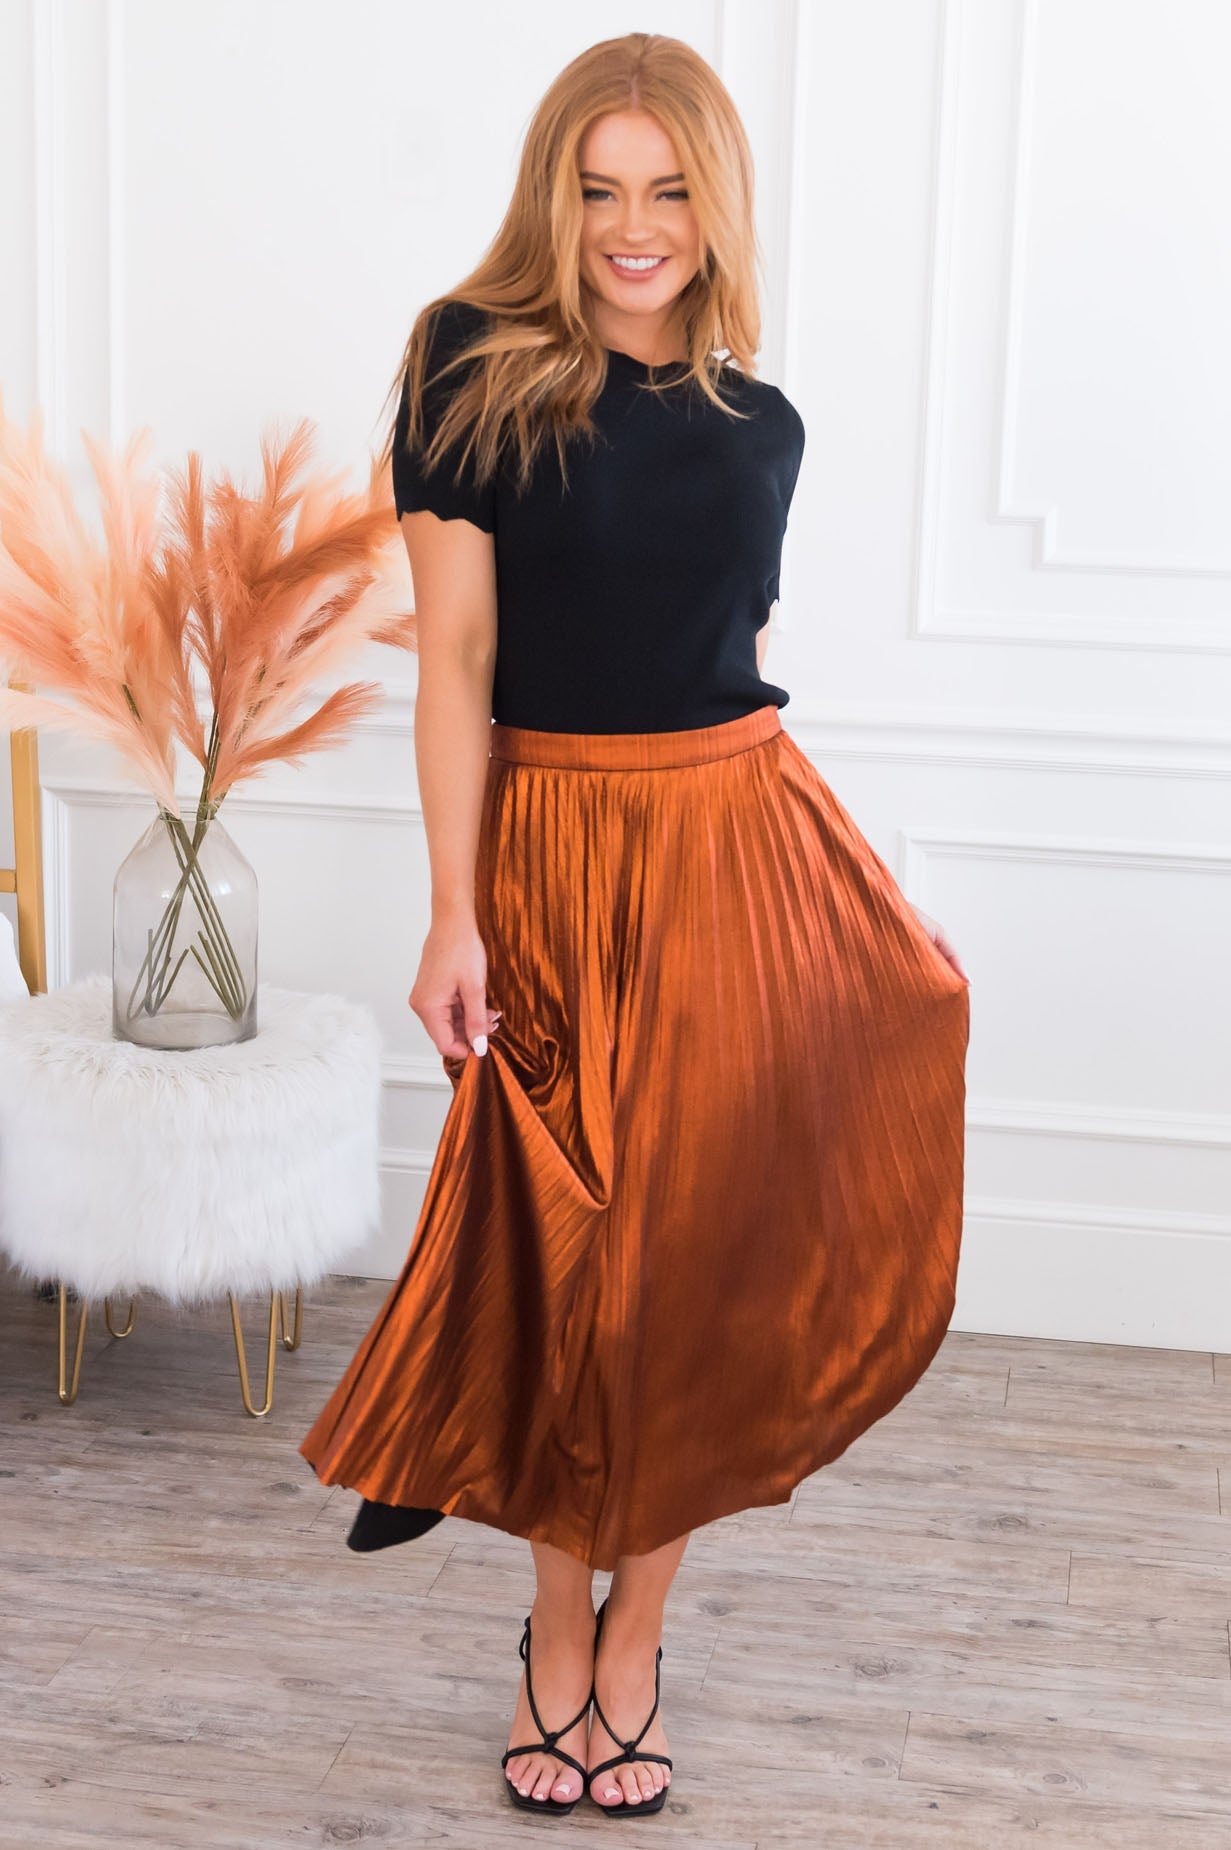 Clipkulture | Orange and Black Xhosa Umbhaco Short Skirt With Black  Spaghetti Top